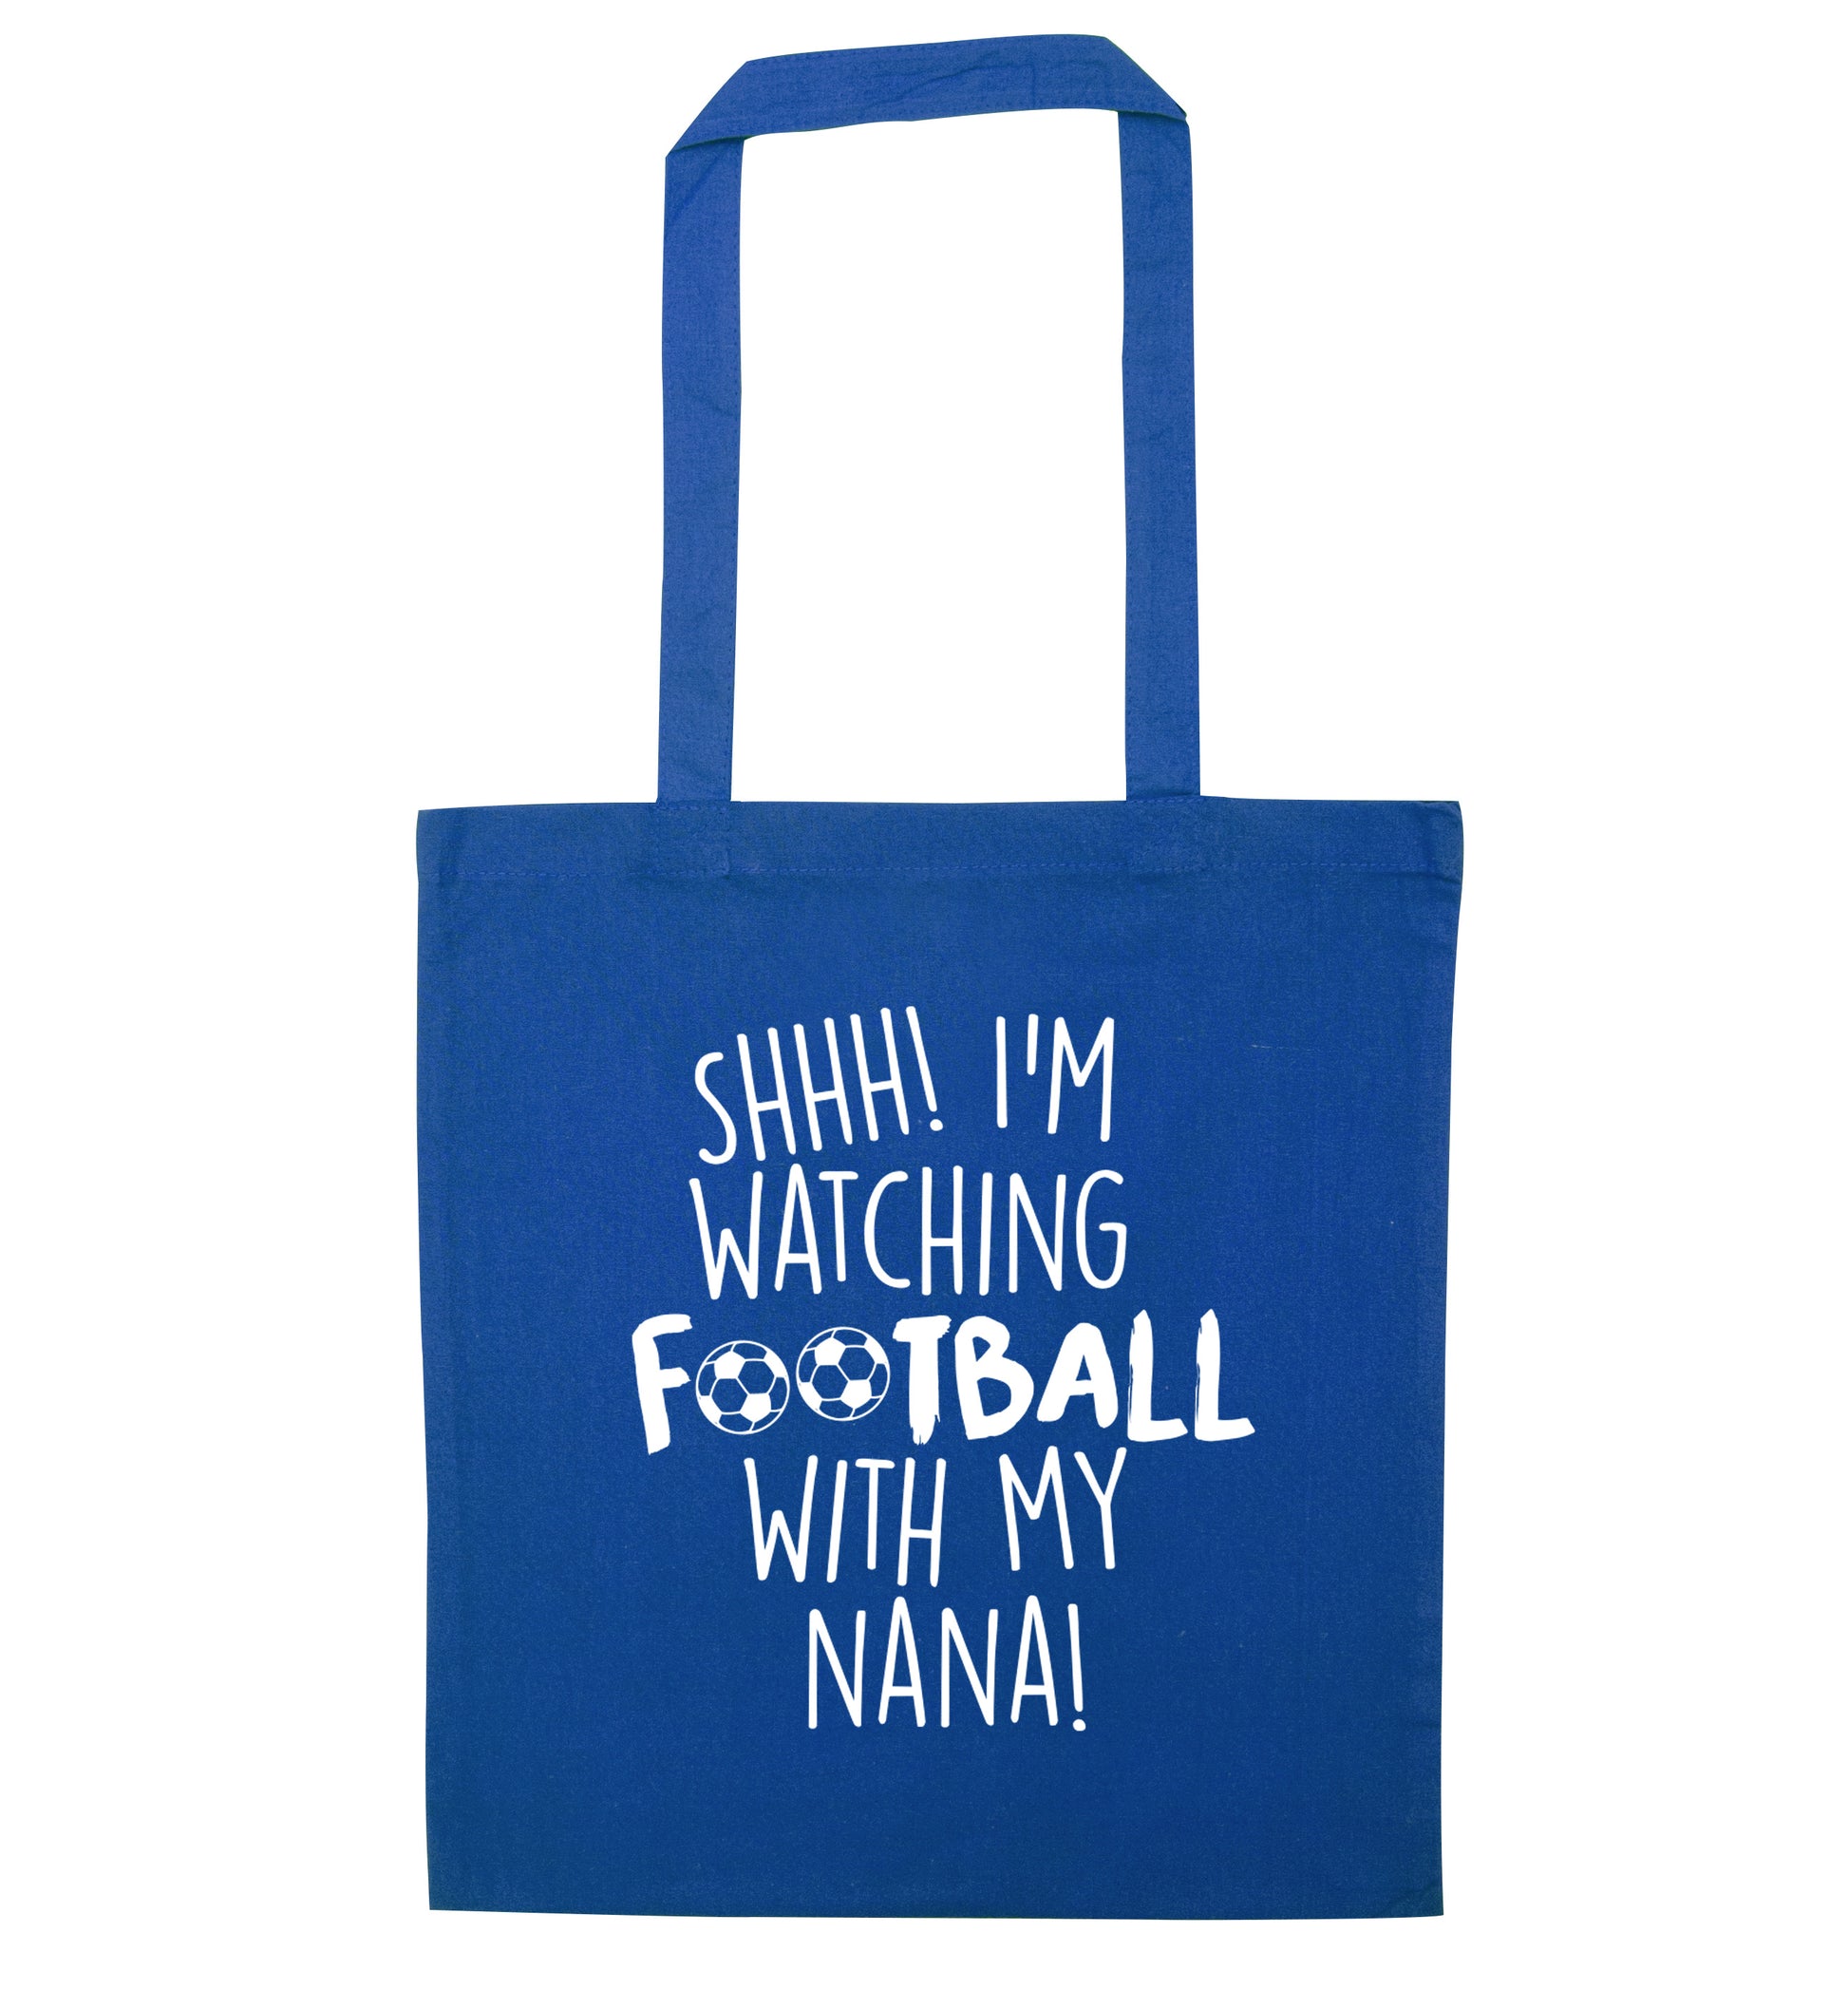 Shhh I'm watching football with my nana blue tote bag